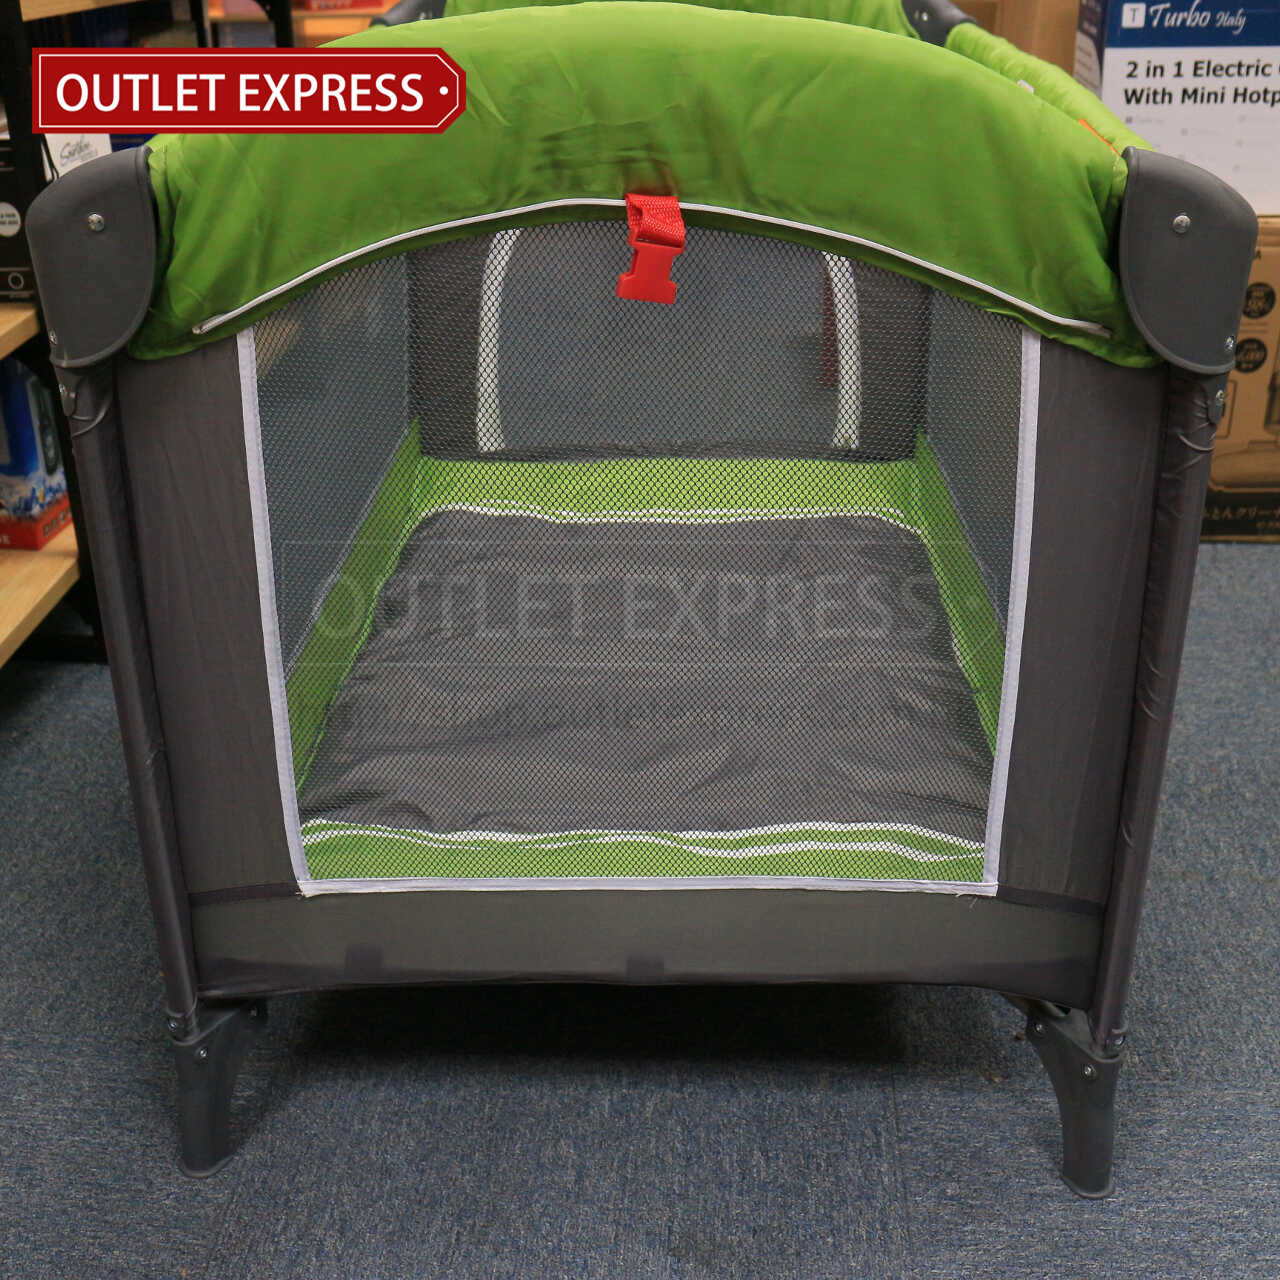 Babyface 歐式多功能可折疊嬰兒床BB床 - Outlet Express HK生活百貨城實拍相片